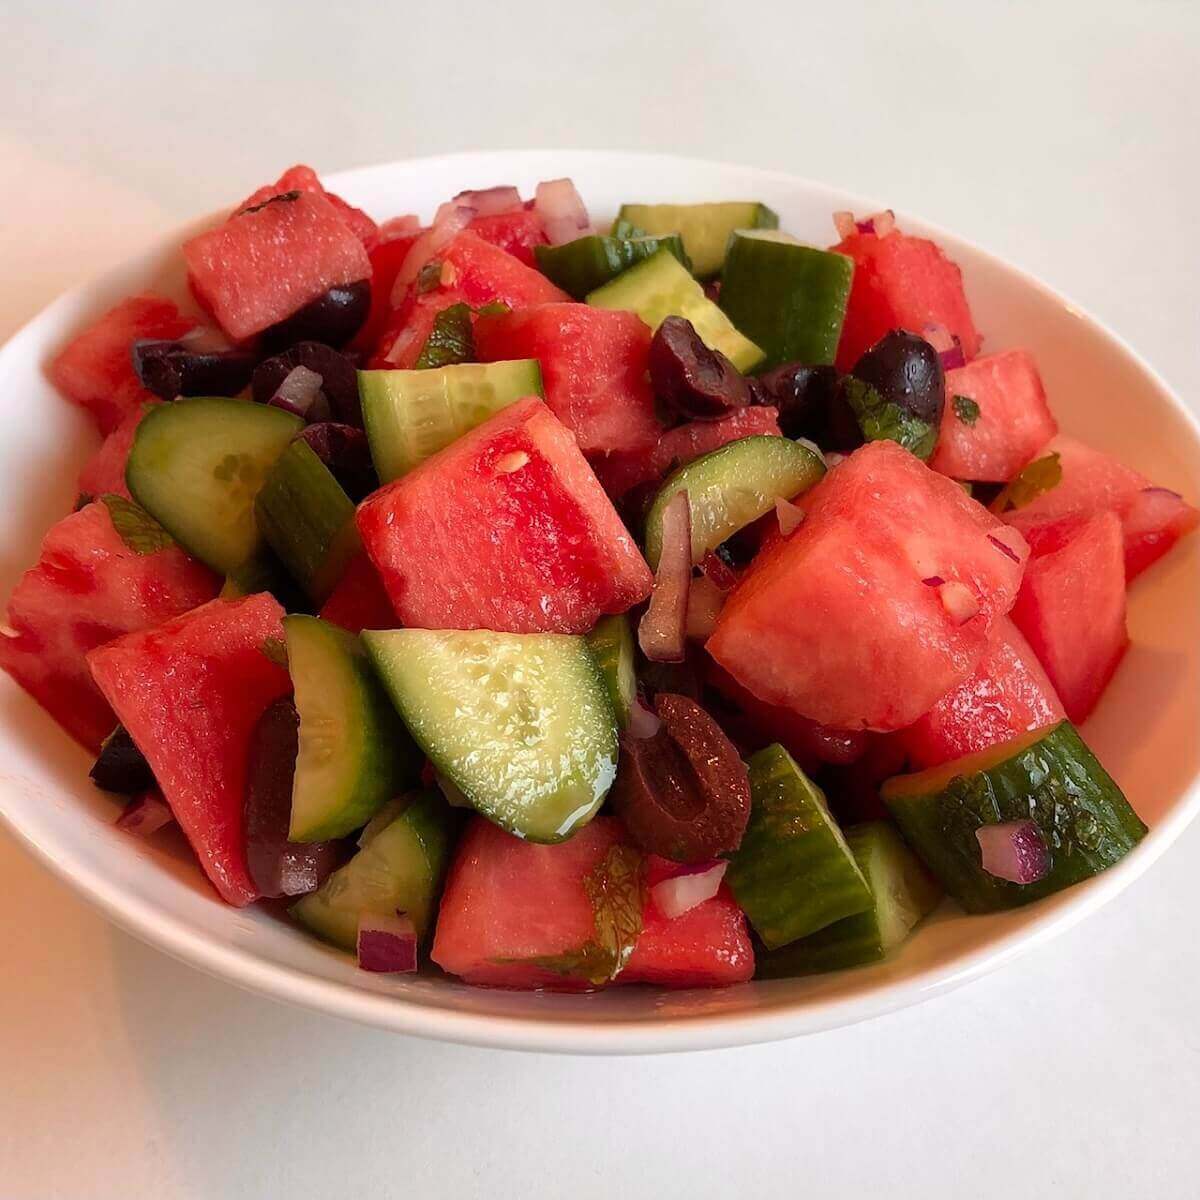 Fruit salad in a ceramic bowl.